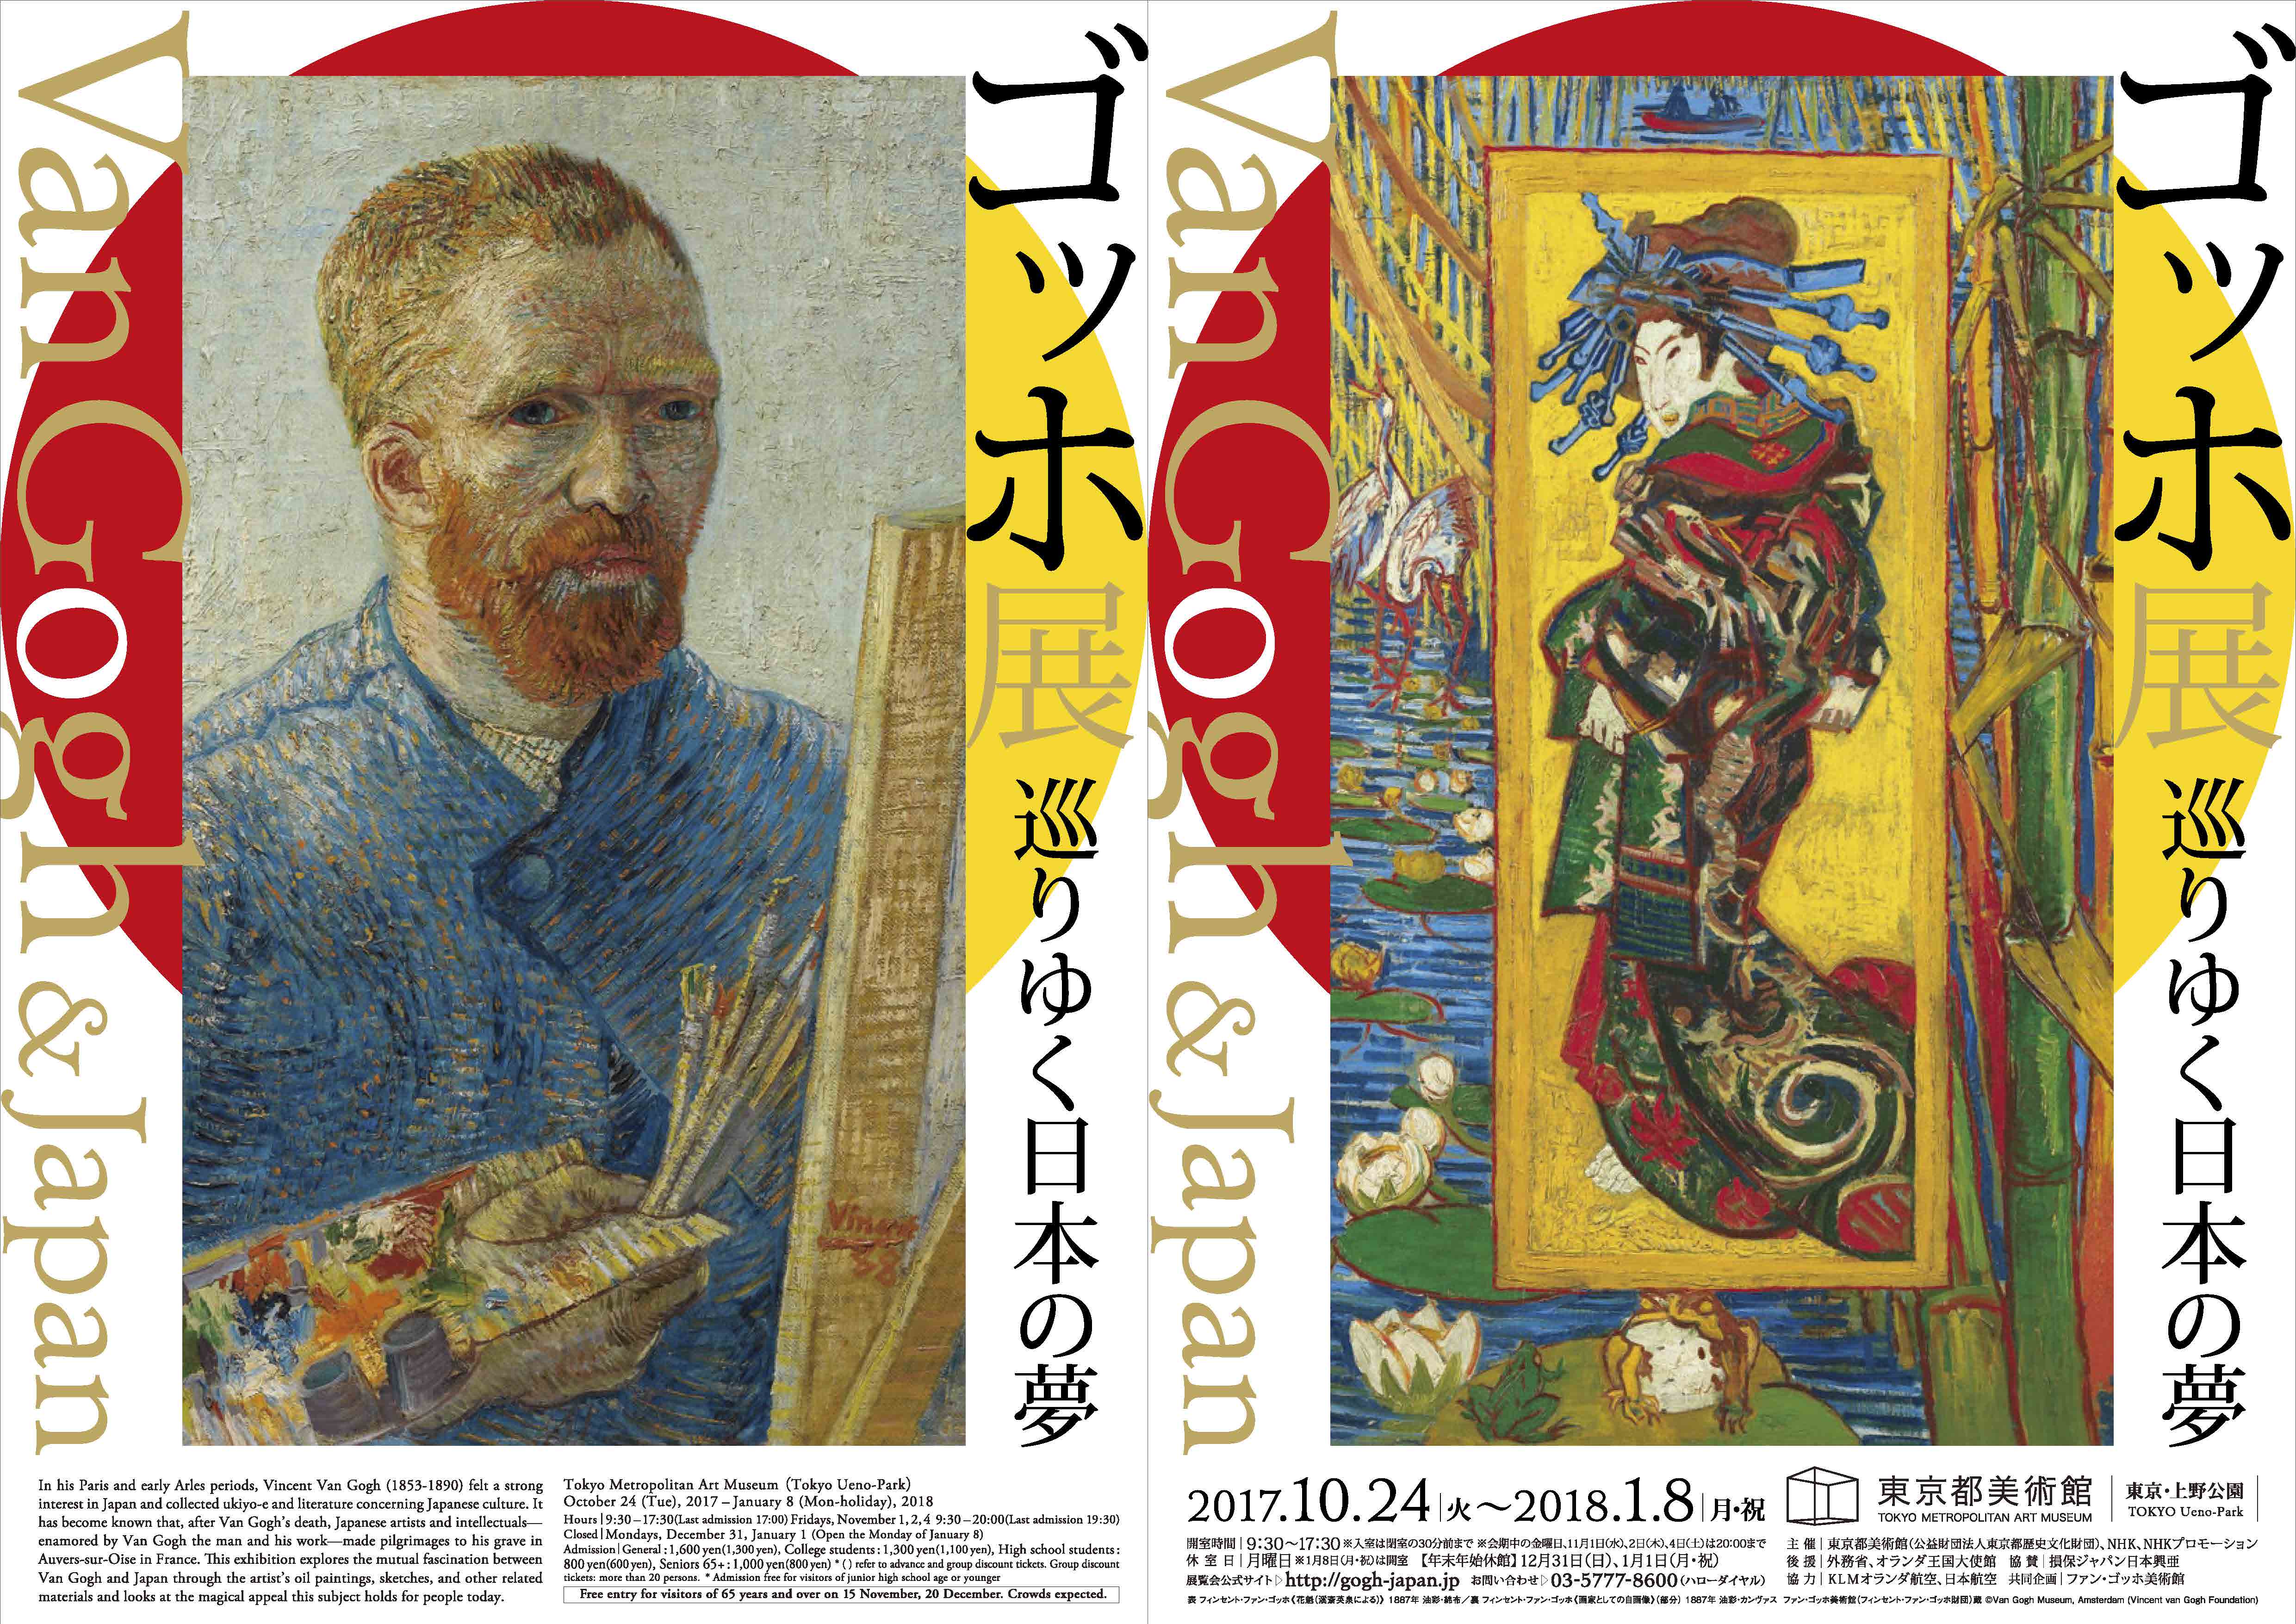 9. Van Gogh & Japan - October 24, 2017 through January 8, 2018.